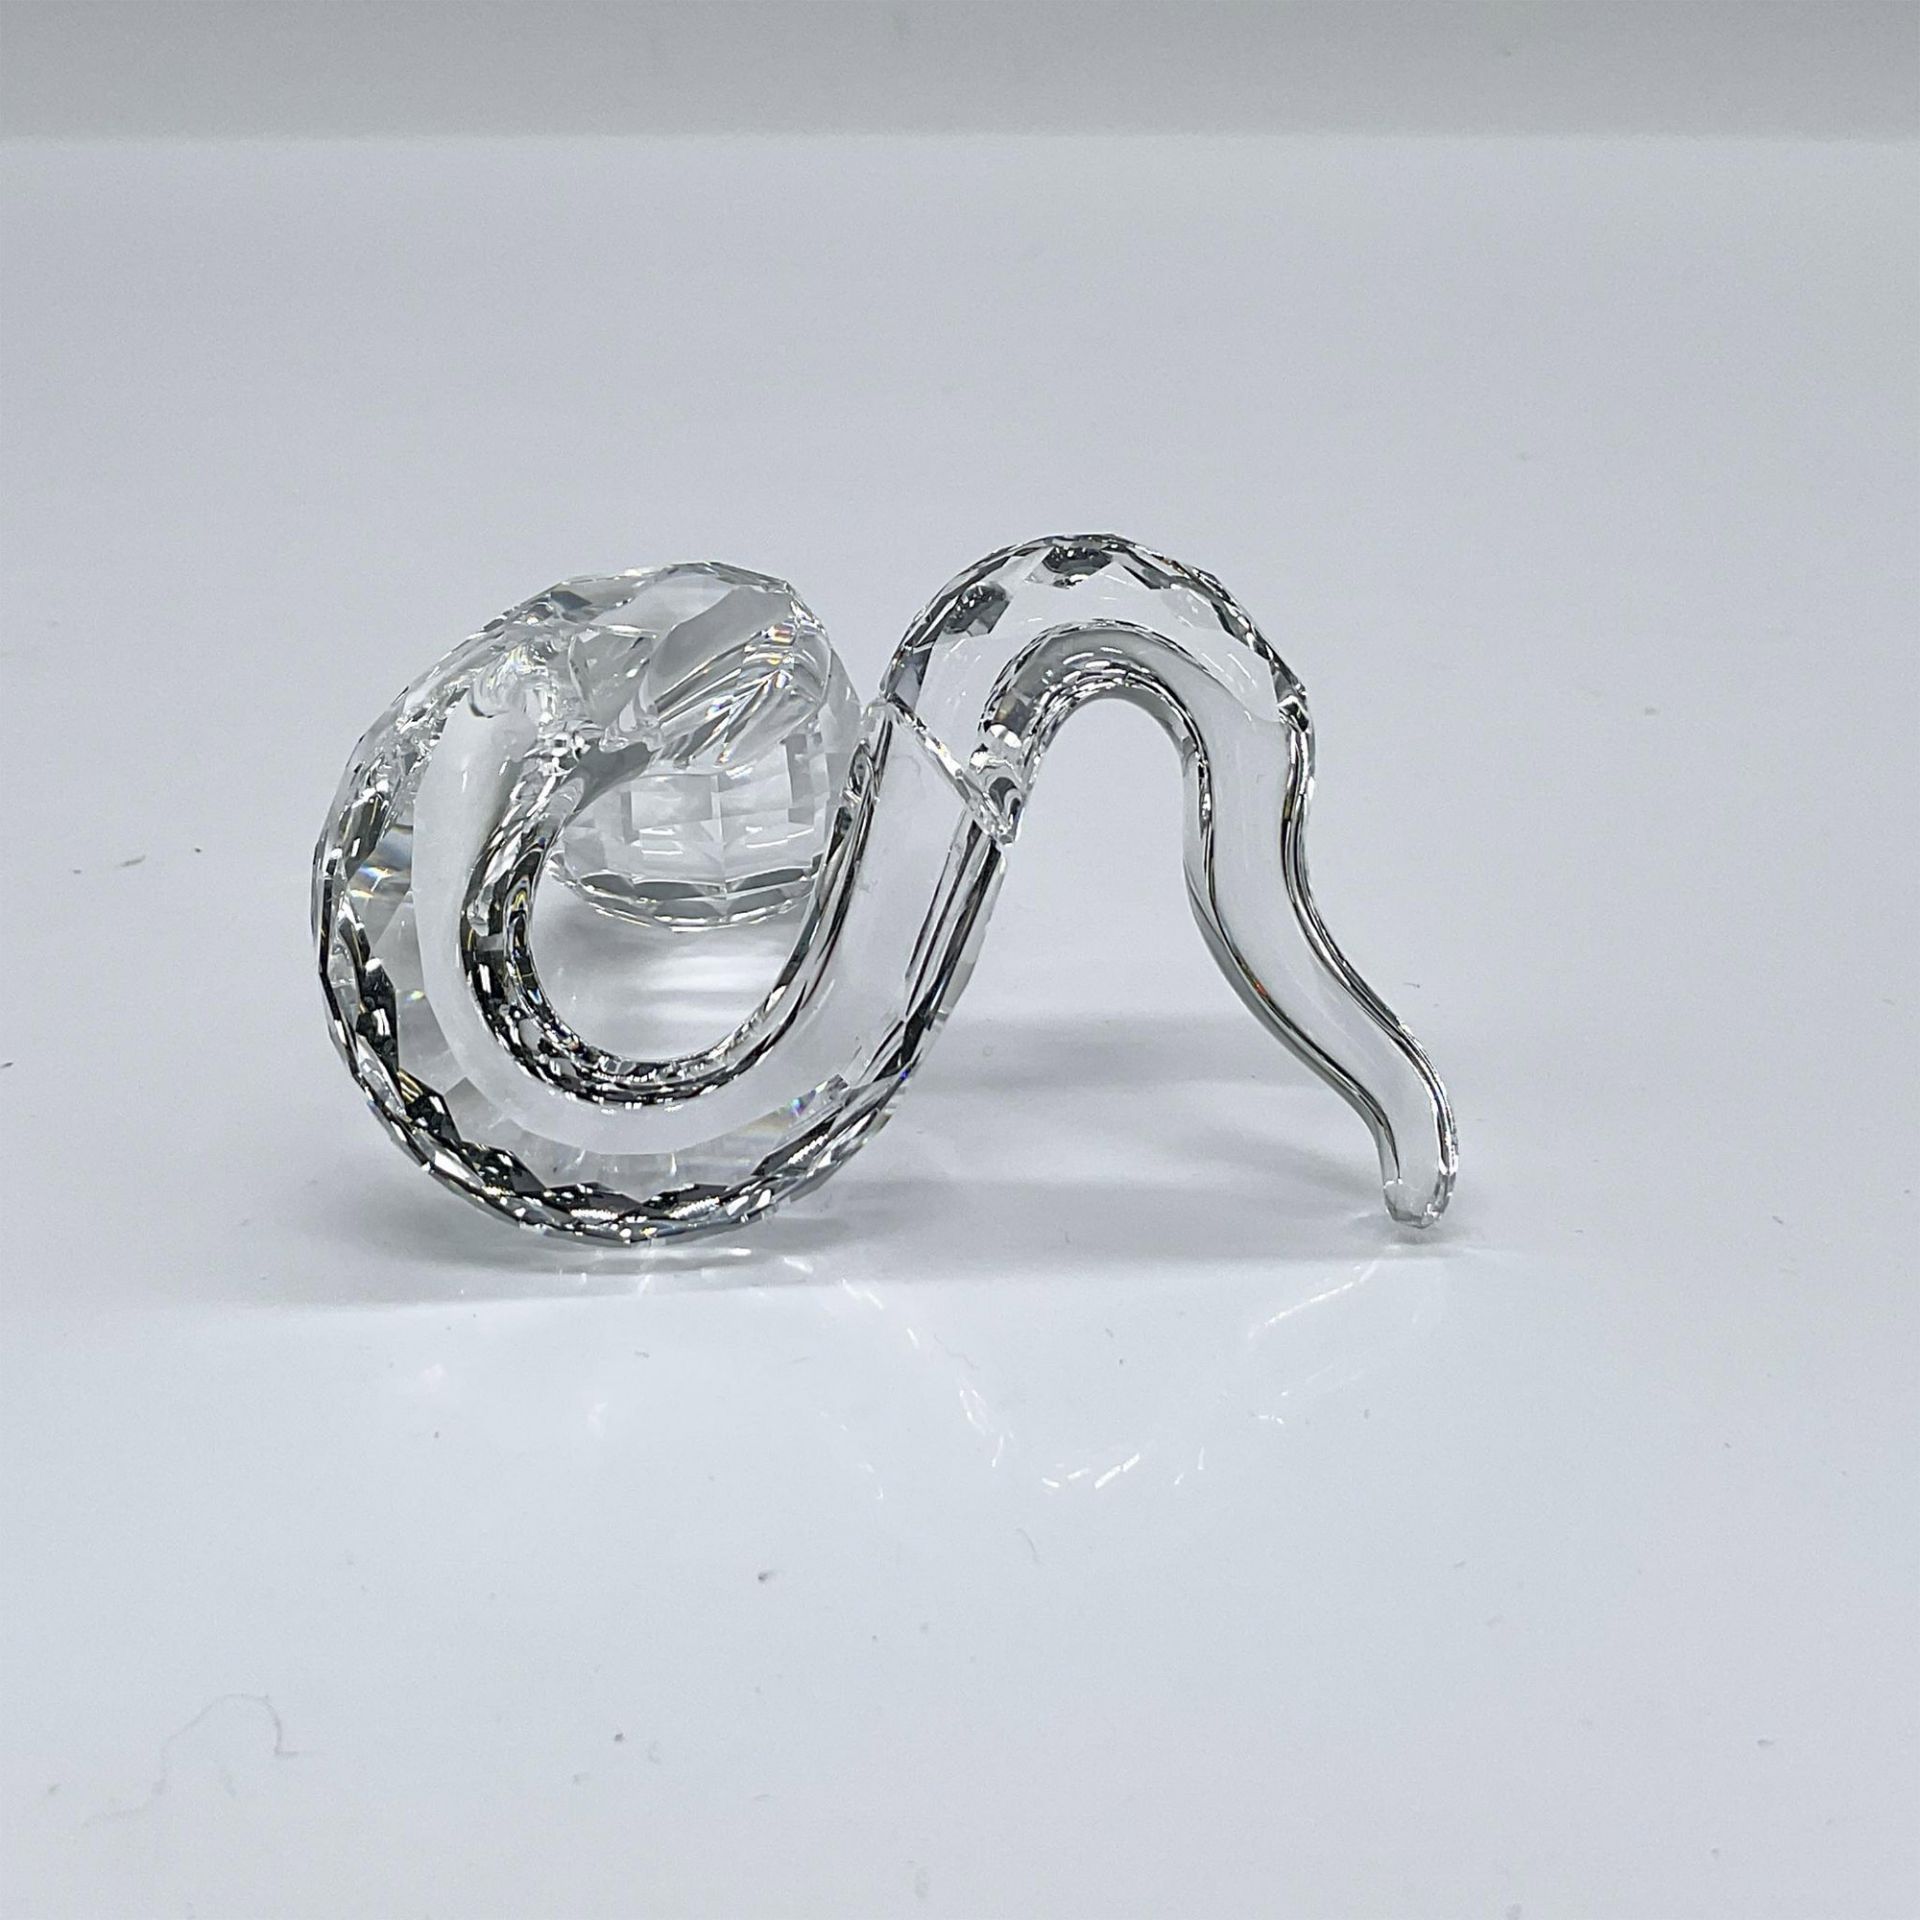 Swarovski Silver Crystal Figurine, Cobra - Image 3 of 3